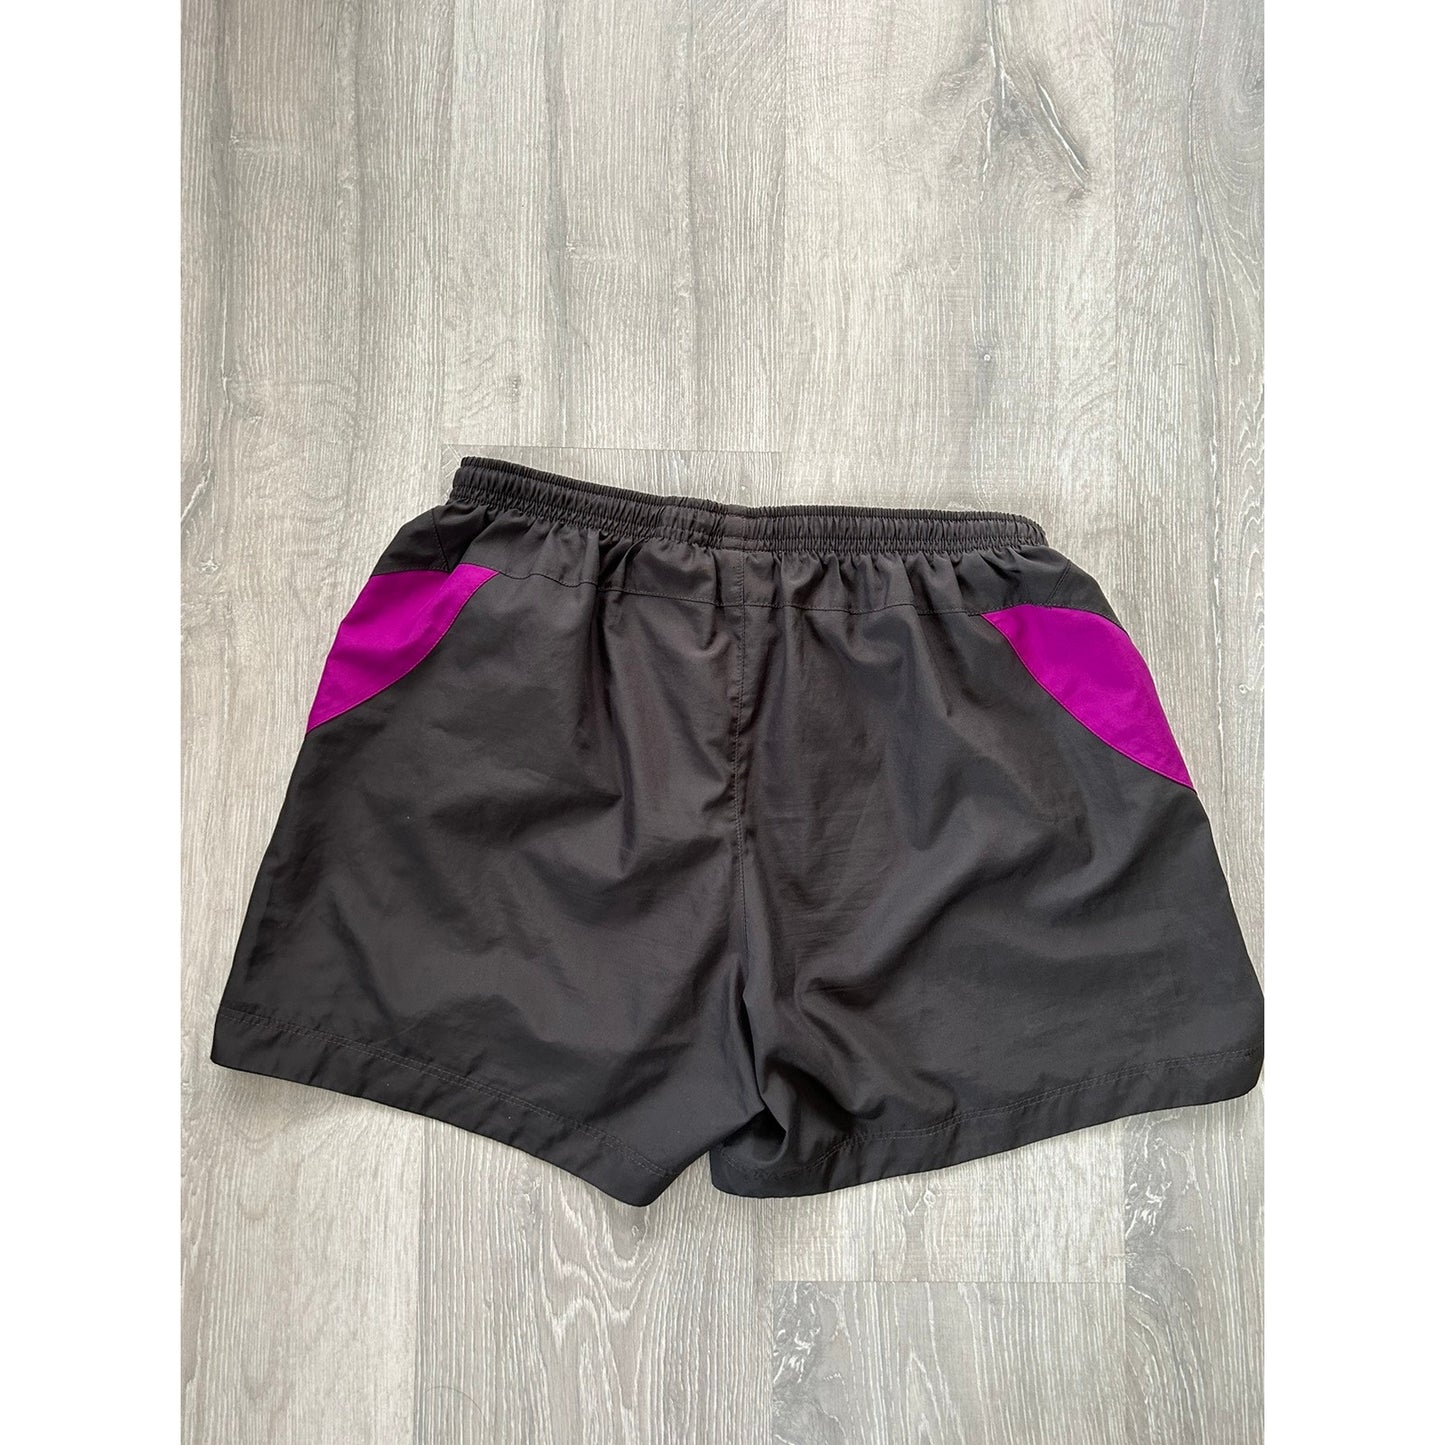 Nike vintage grey purple shorts track pant small swoosh